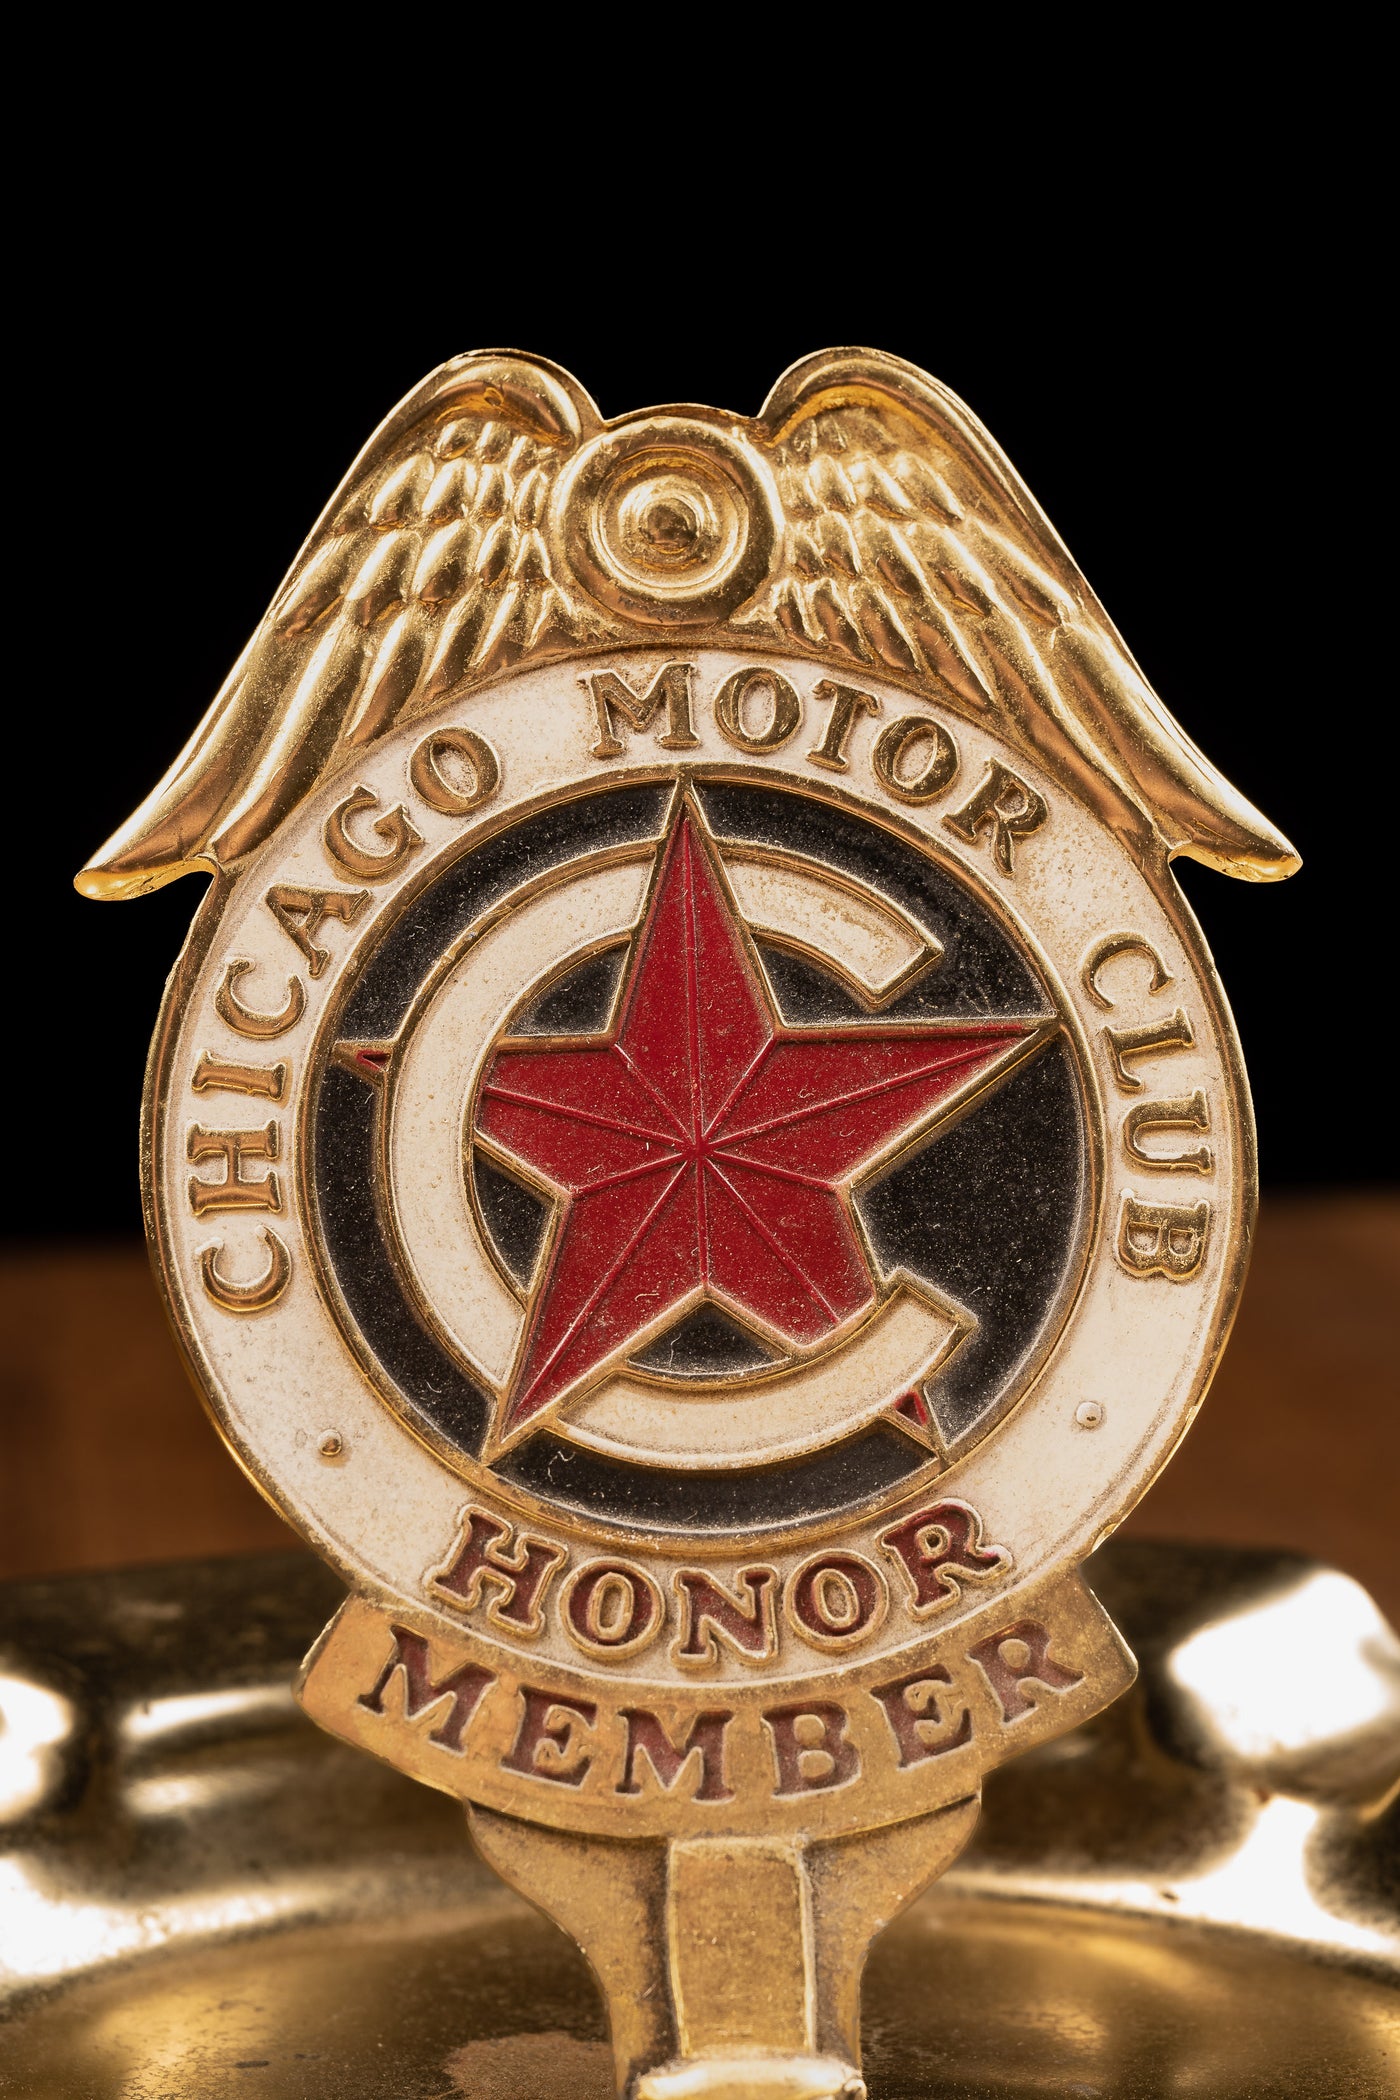 Vintage Chicago Motor Club Honor Member Ashtray